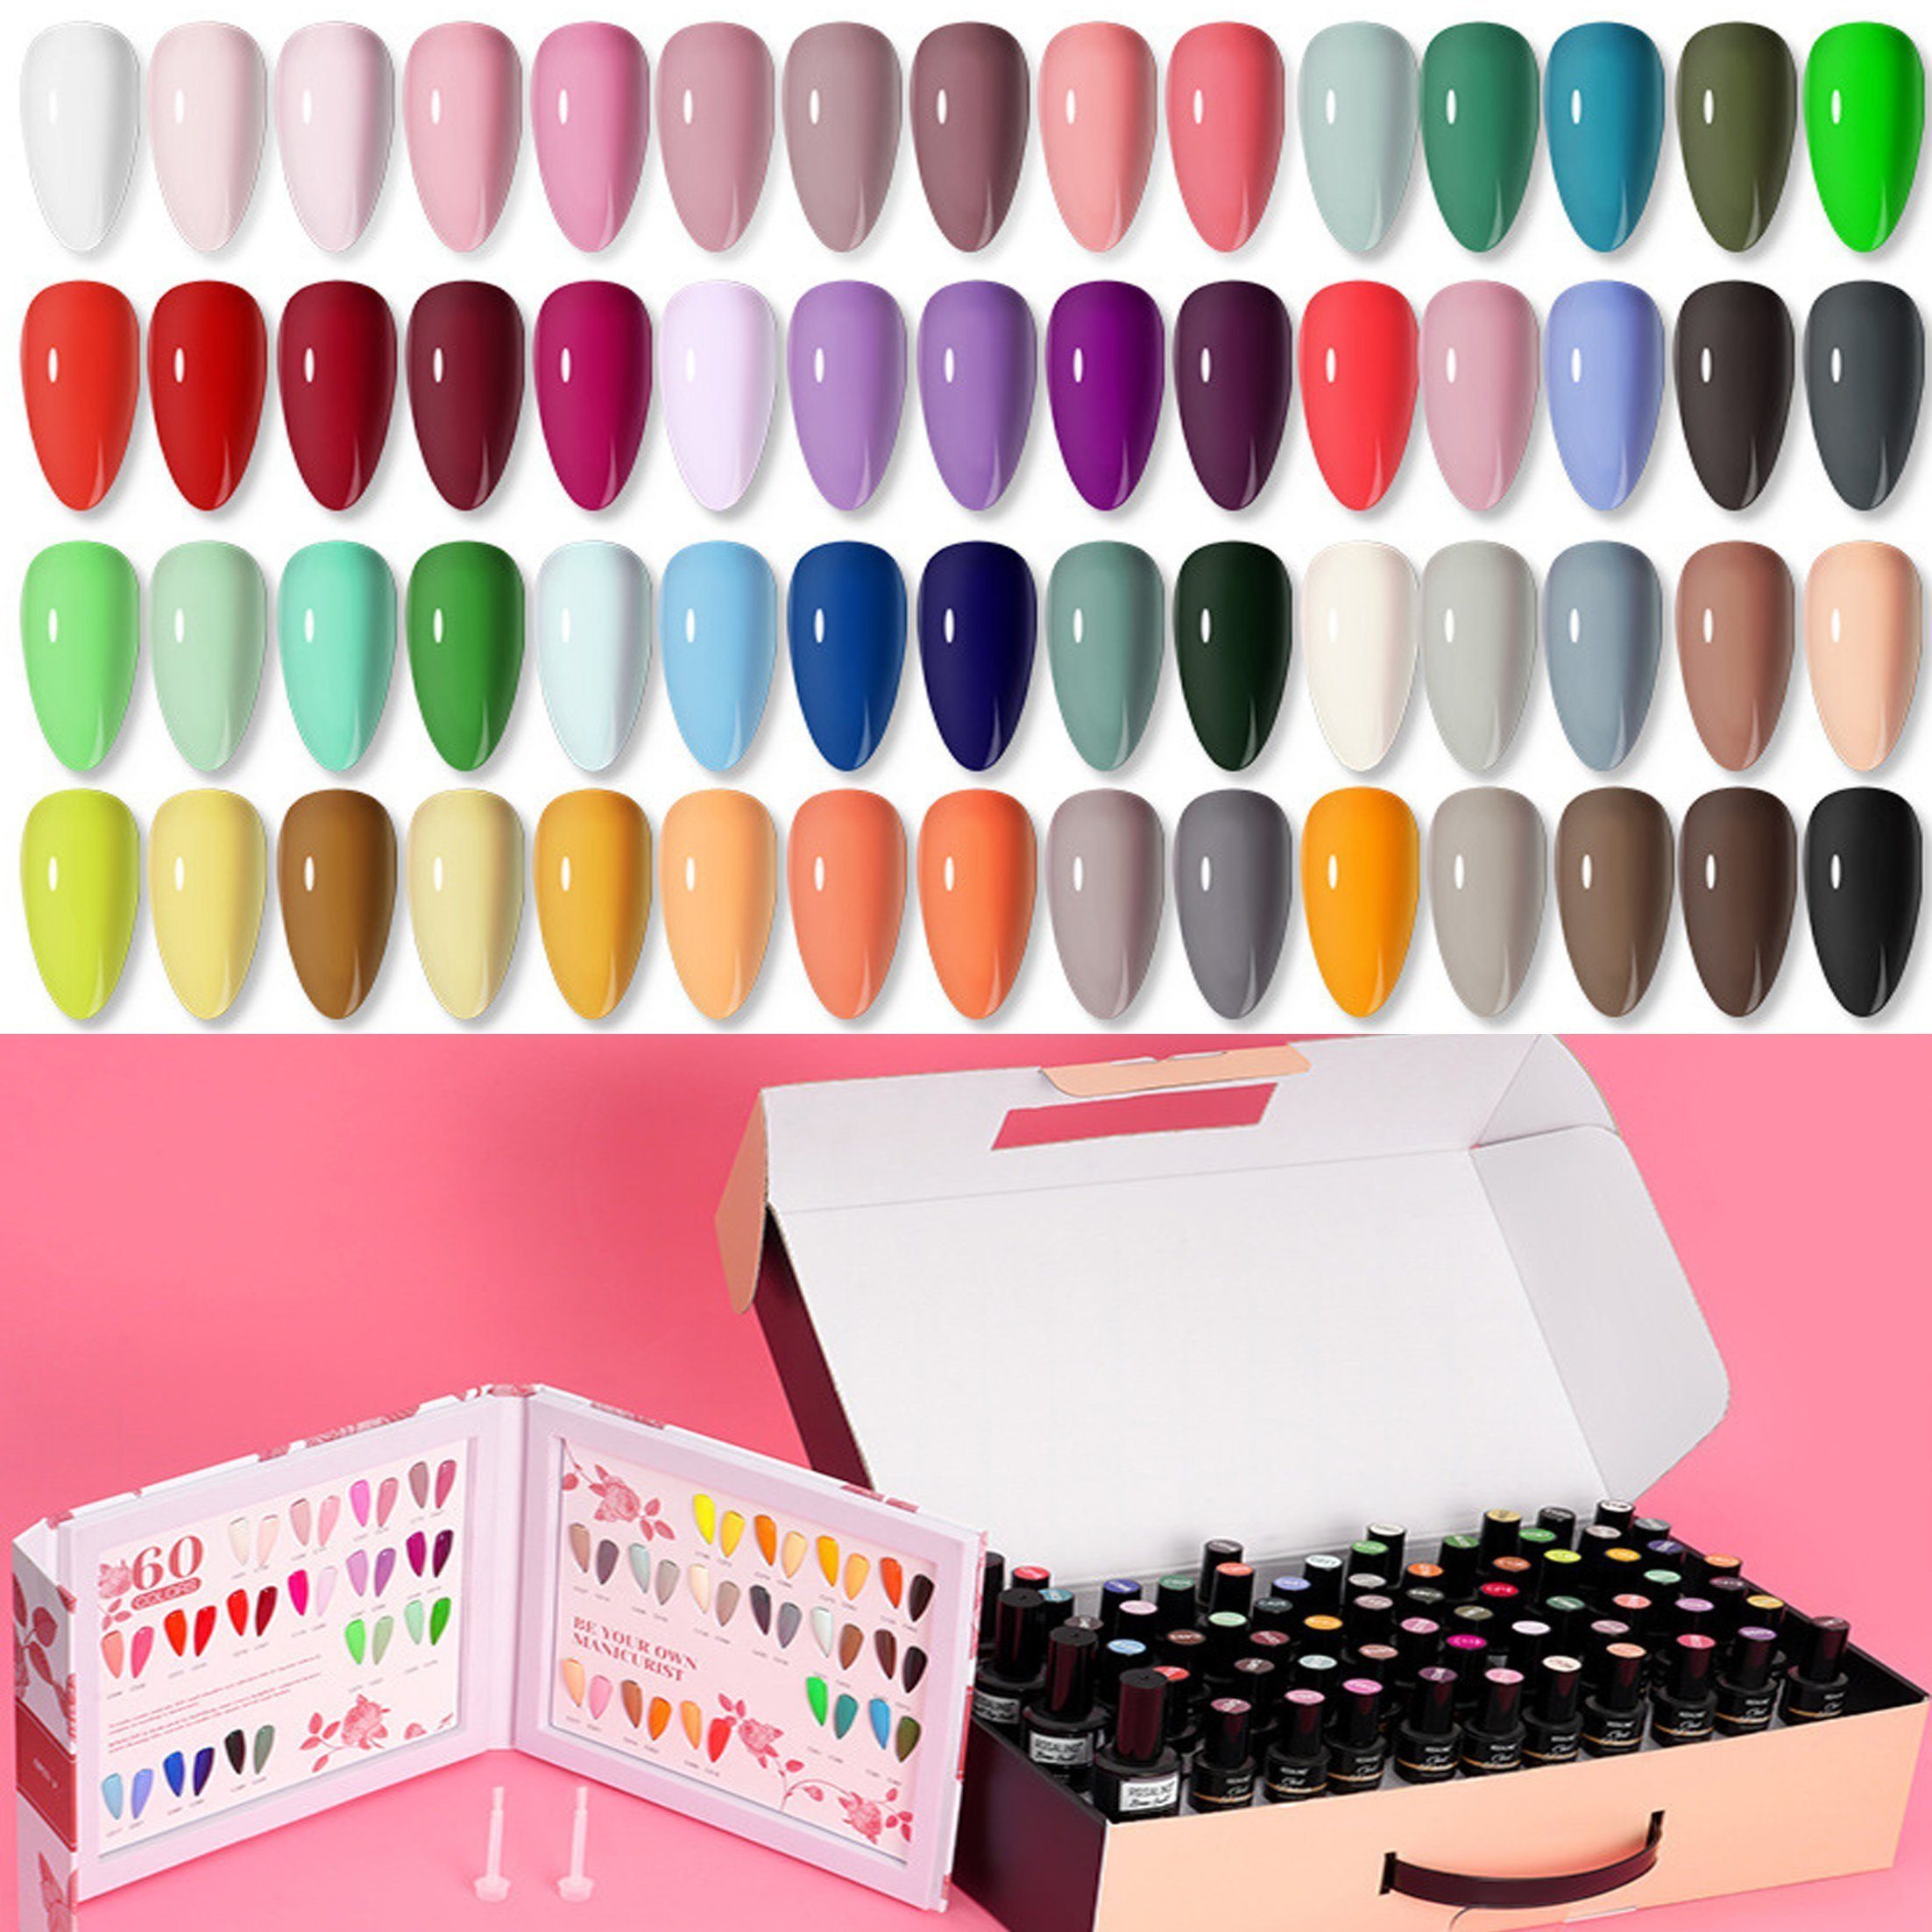 Scheiffy Nagellack-Set 60 Farben Nagellack Gel Set,Morandi Nägel,DIY Nagellack für Anfänger